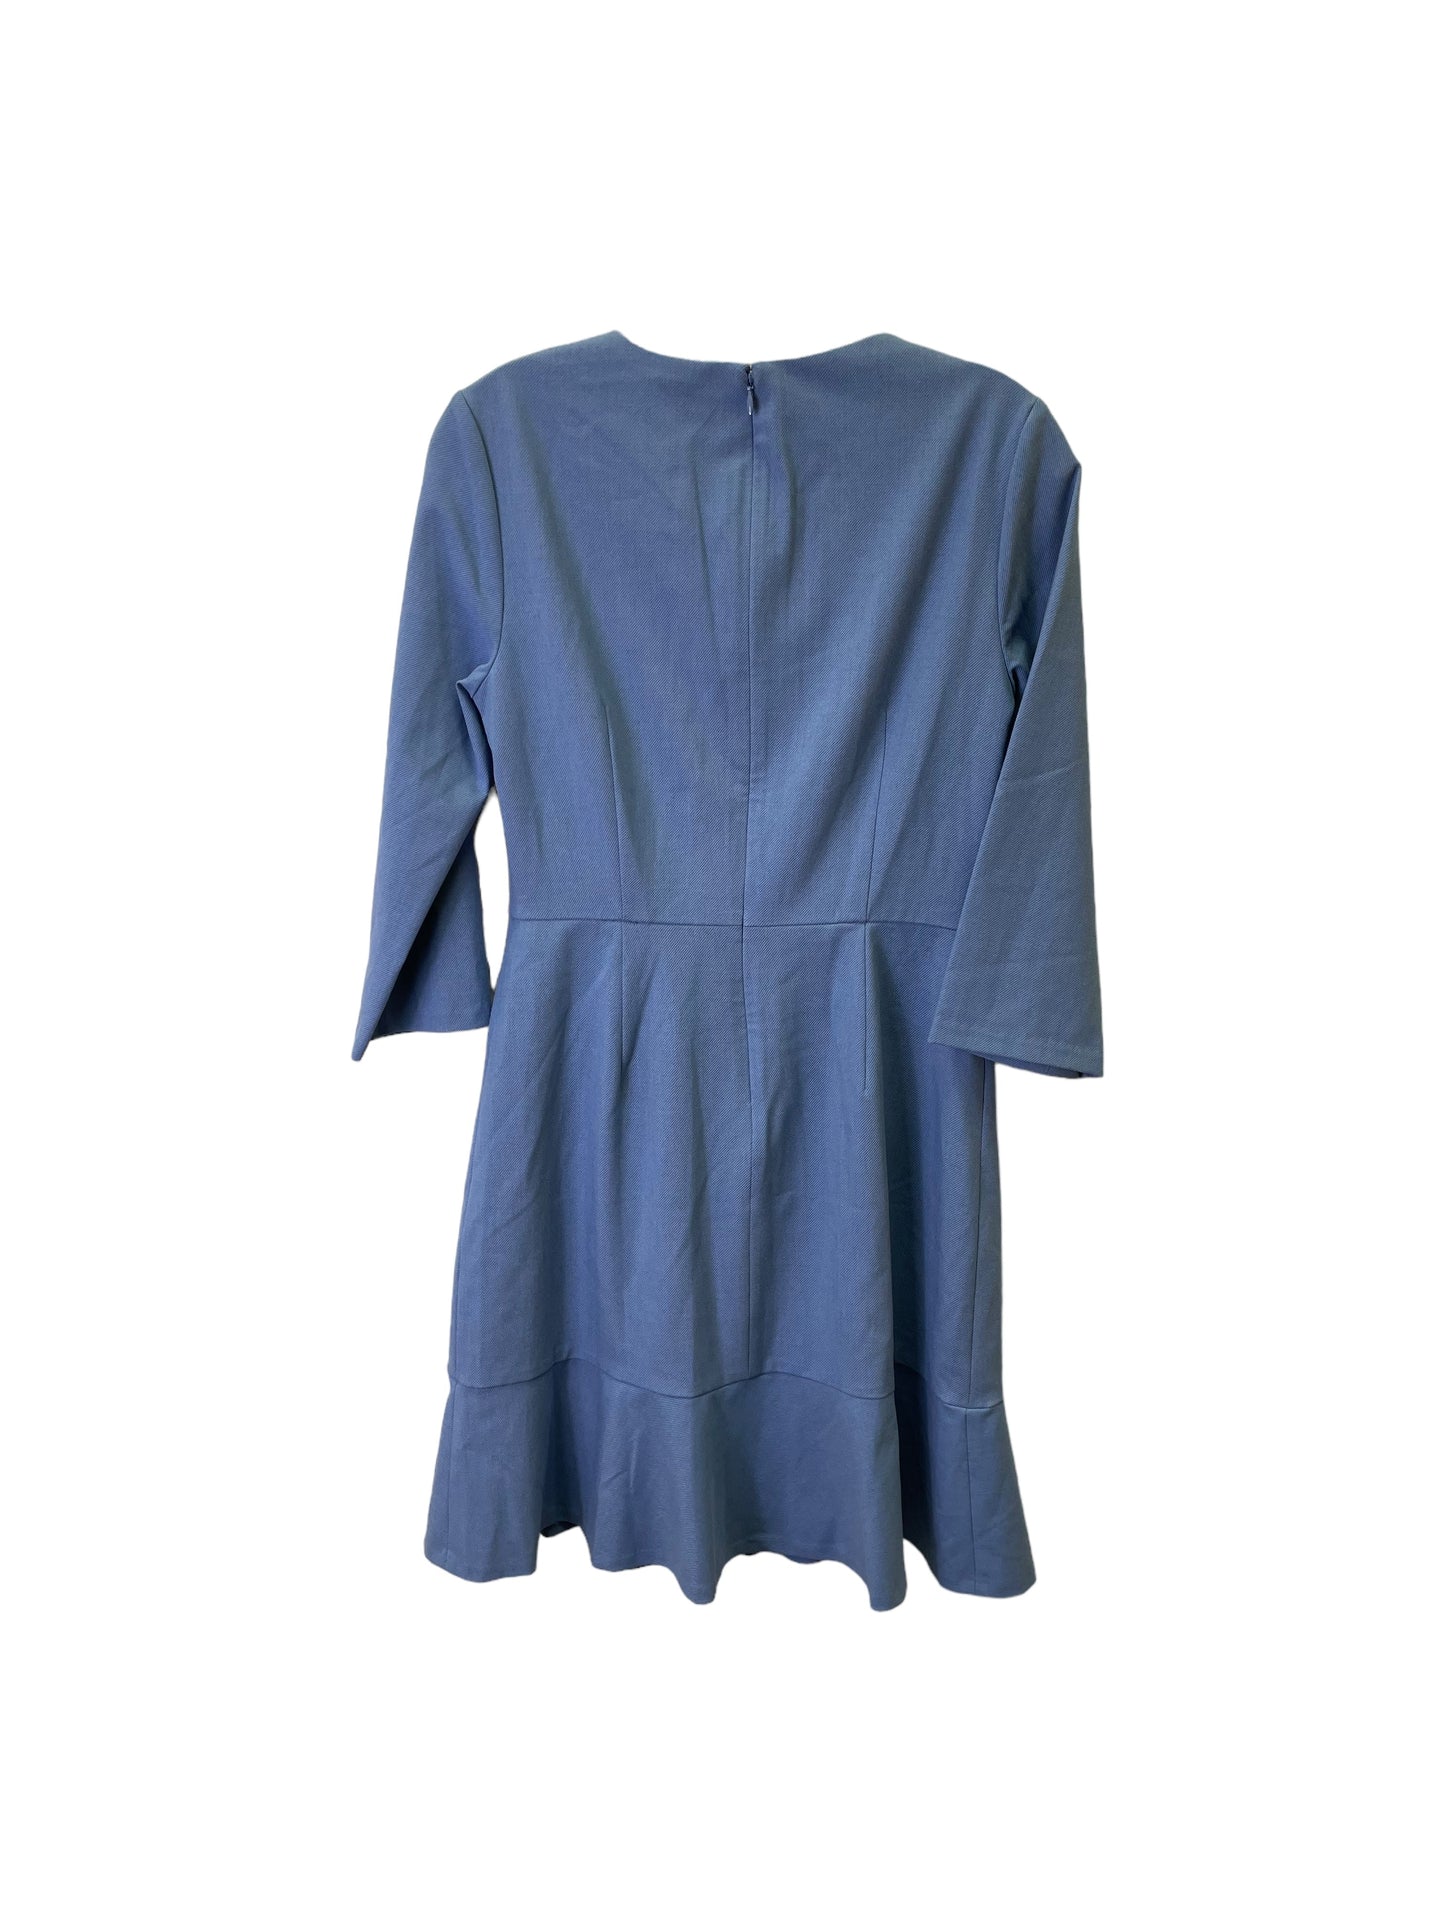 Blue Dress Casual Short By Banana Republic, Size: Xs